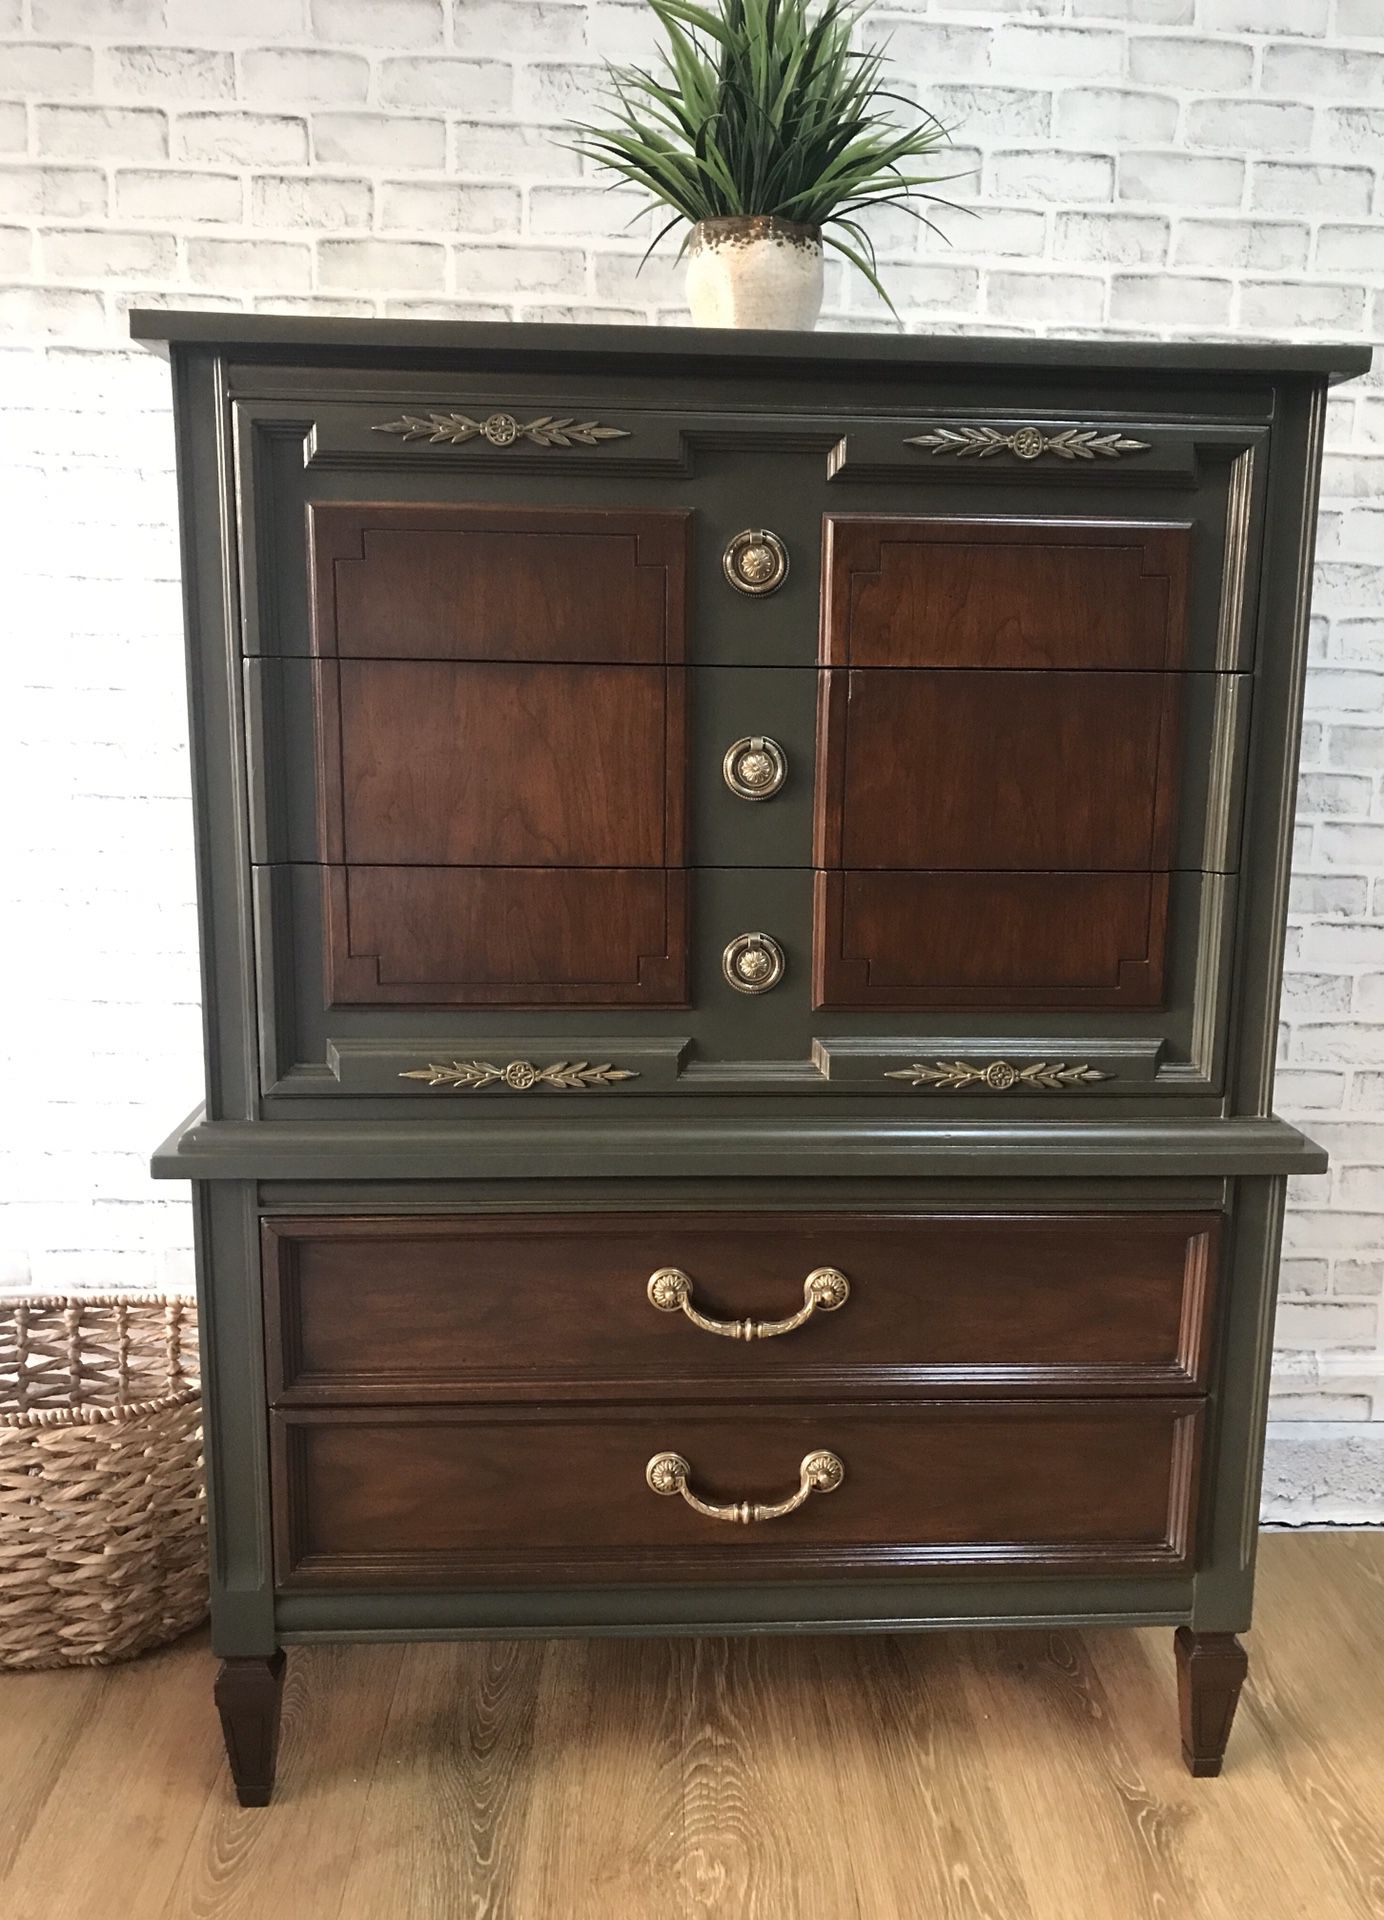 Refinished Dixie dresser